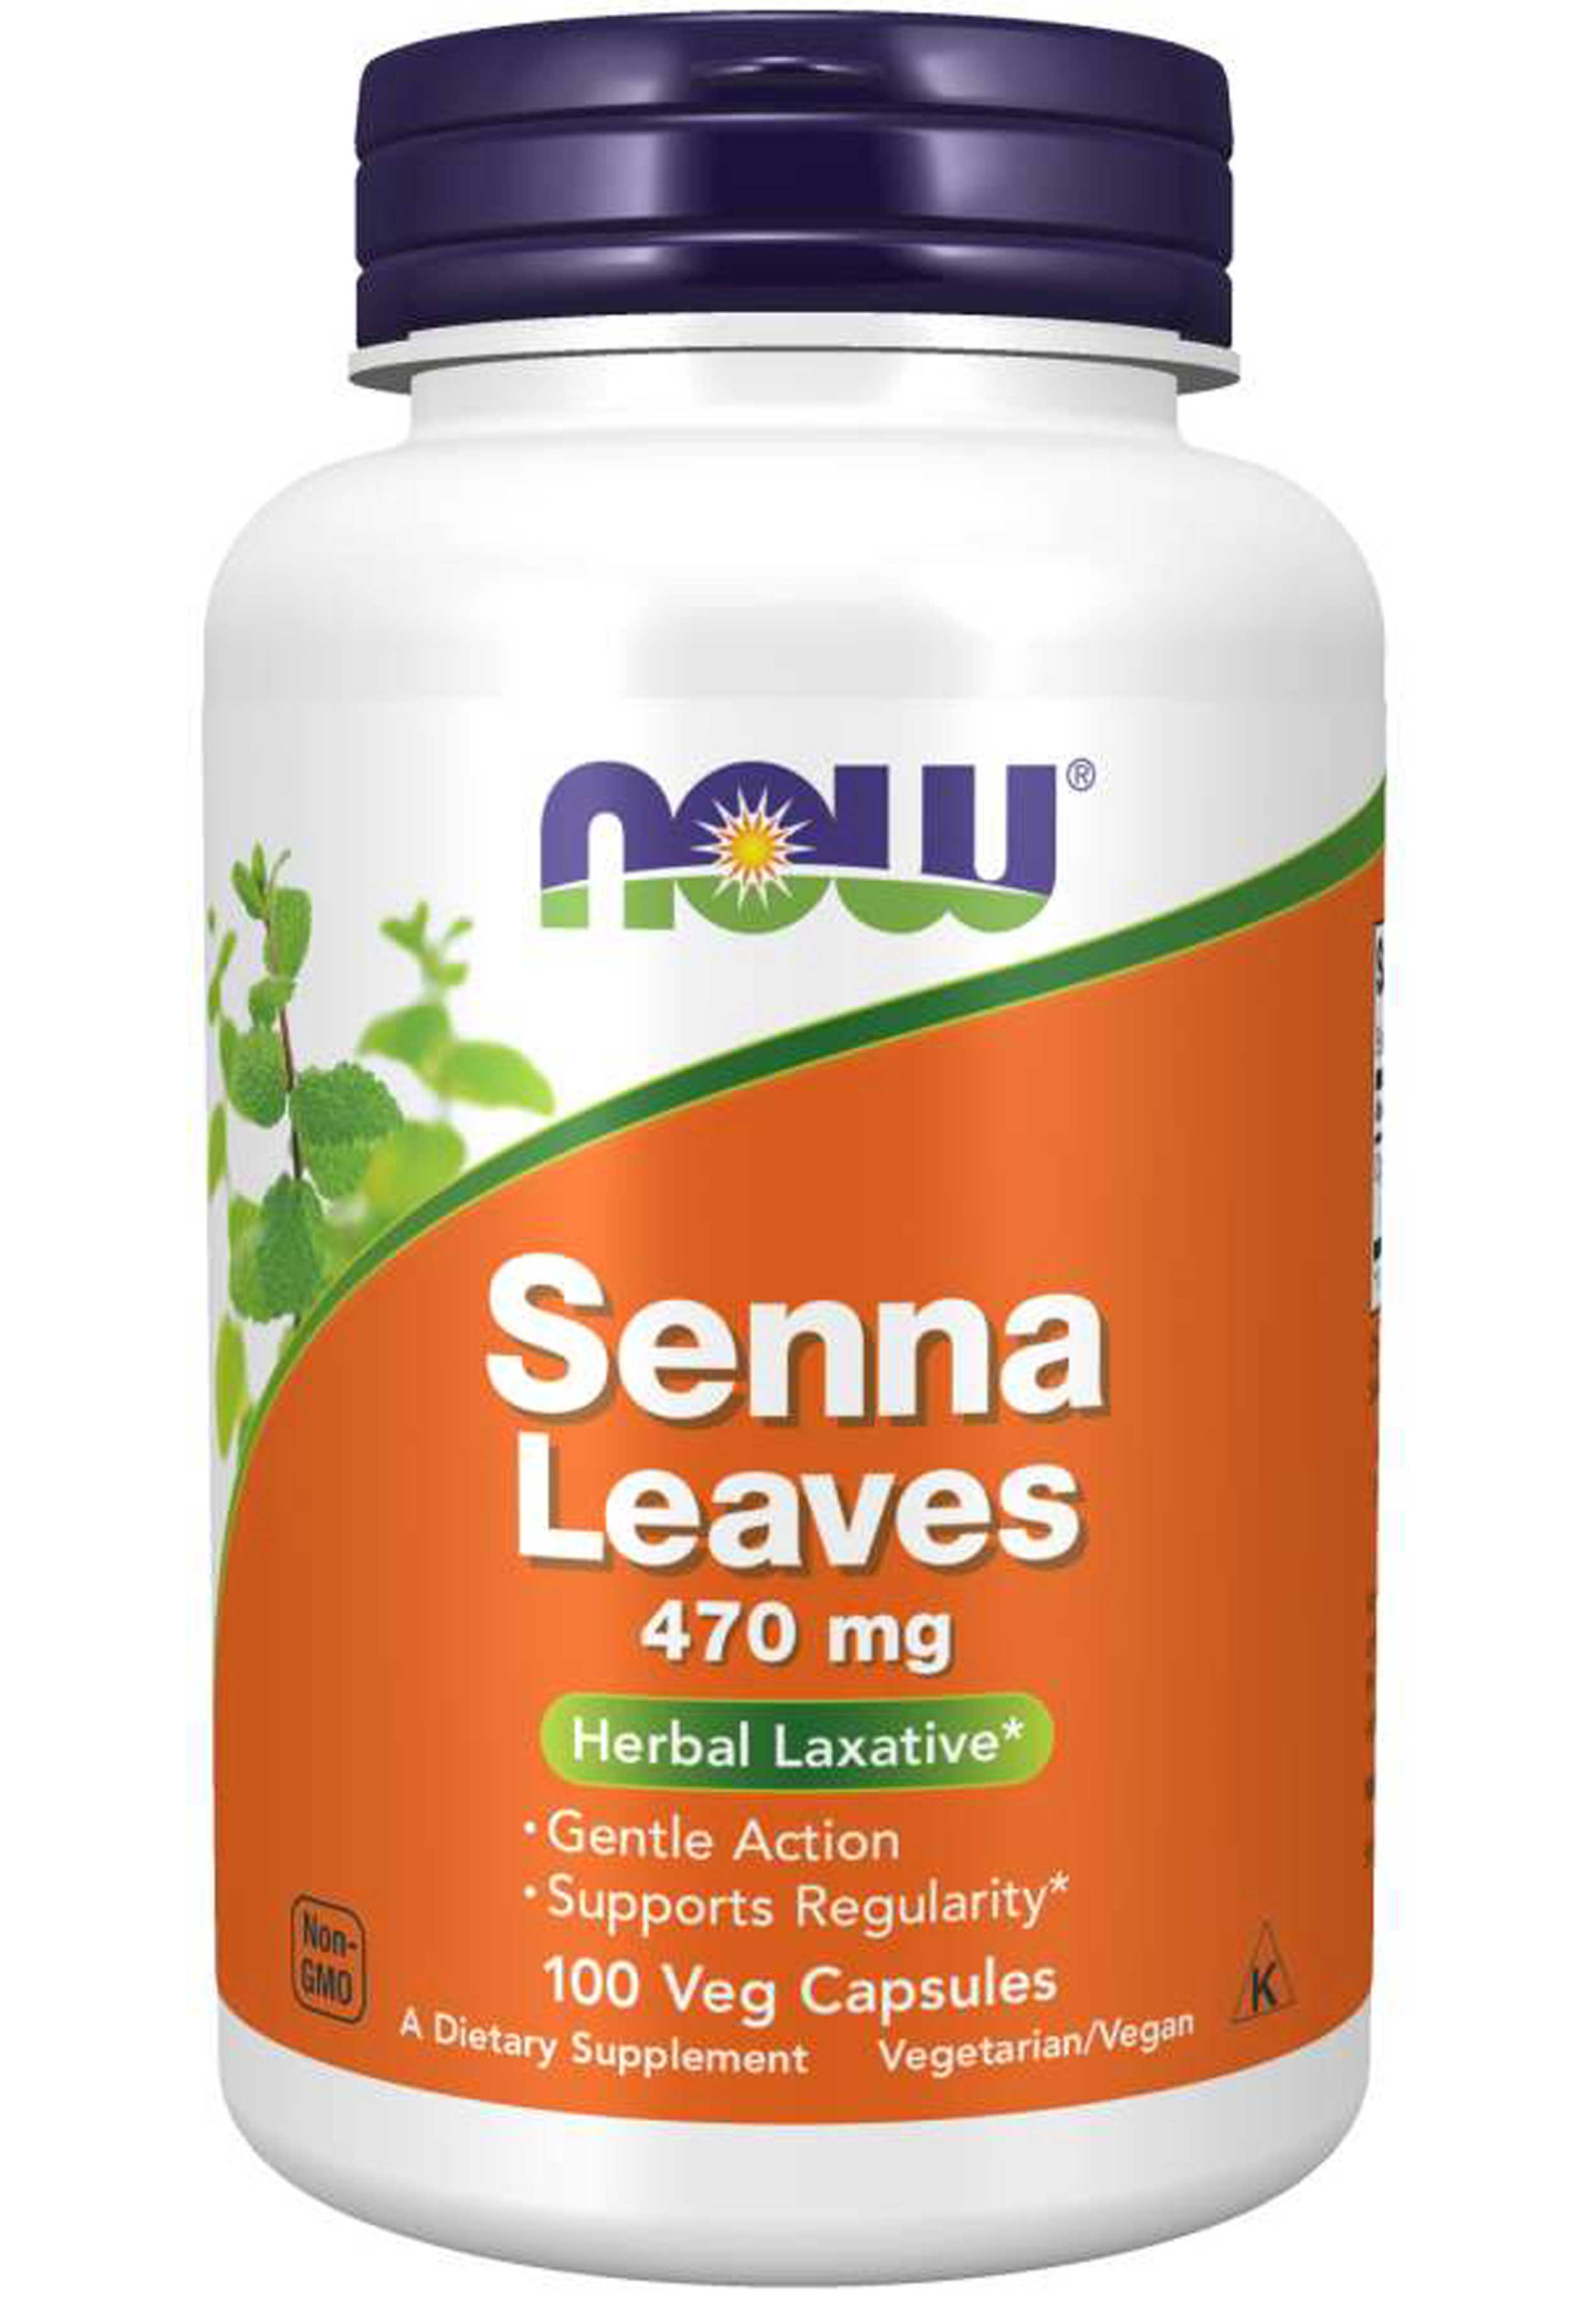 NOW Senna Leaves 470 mg